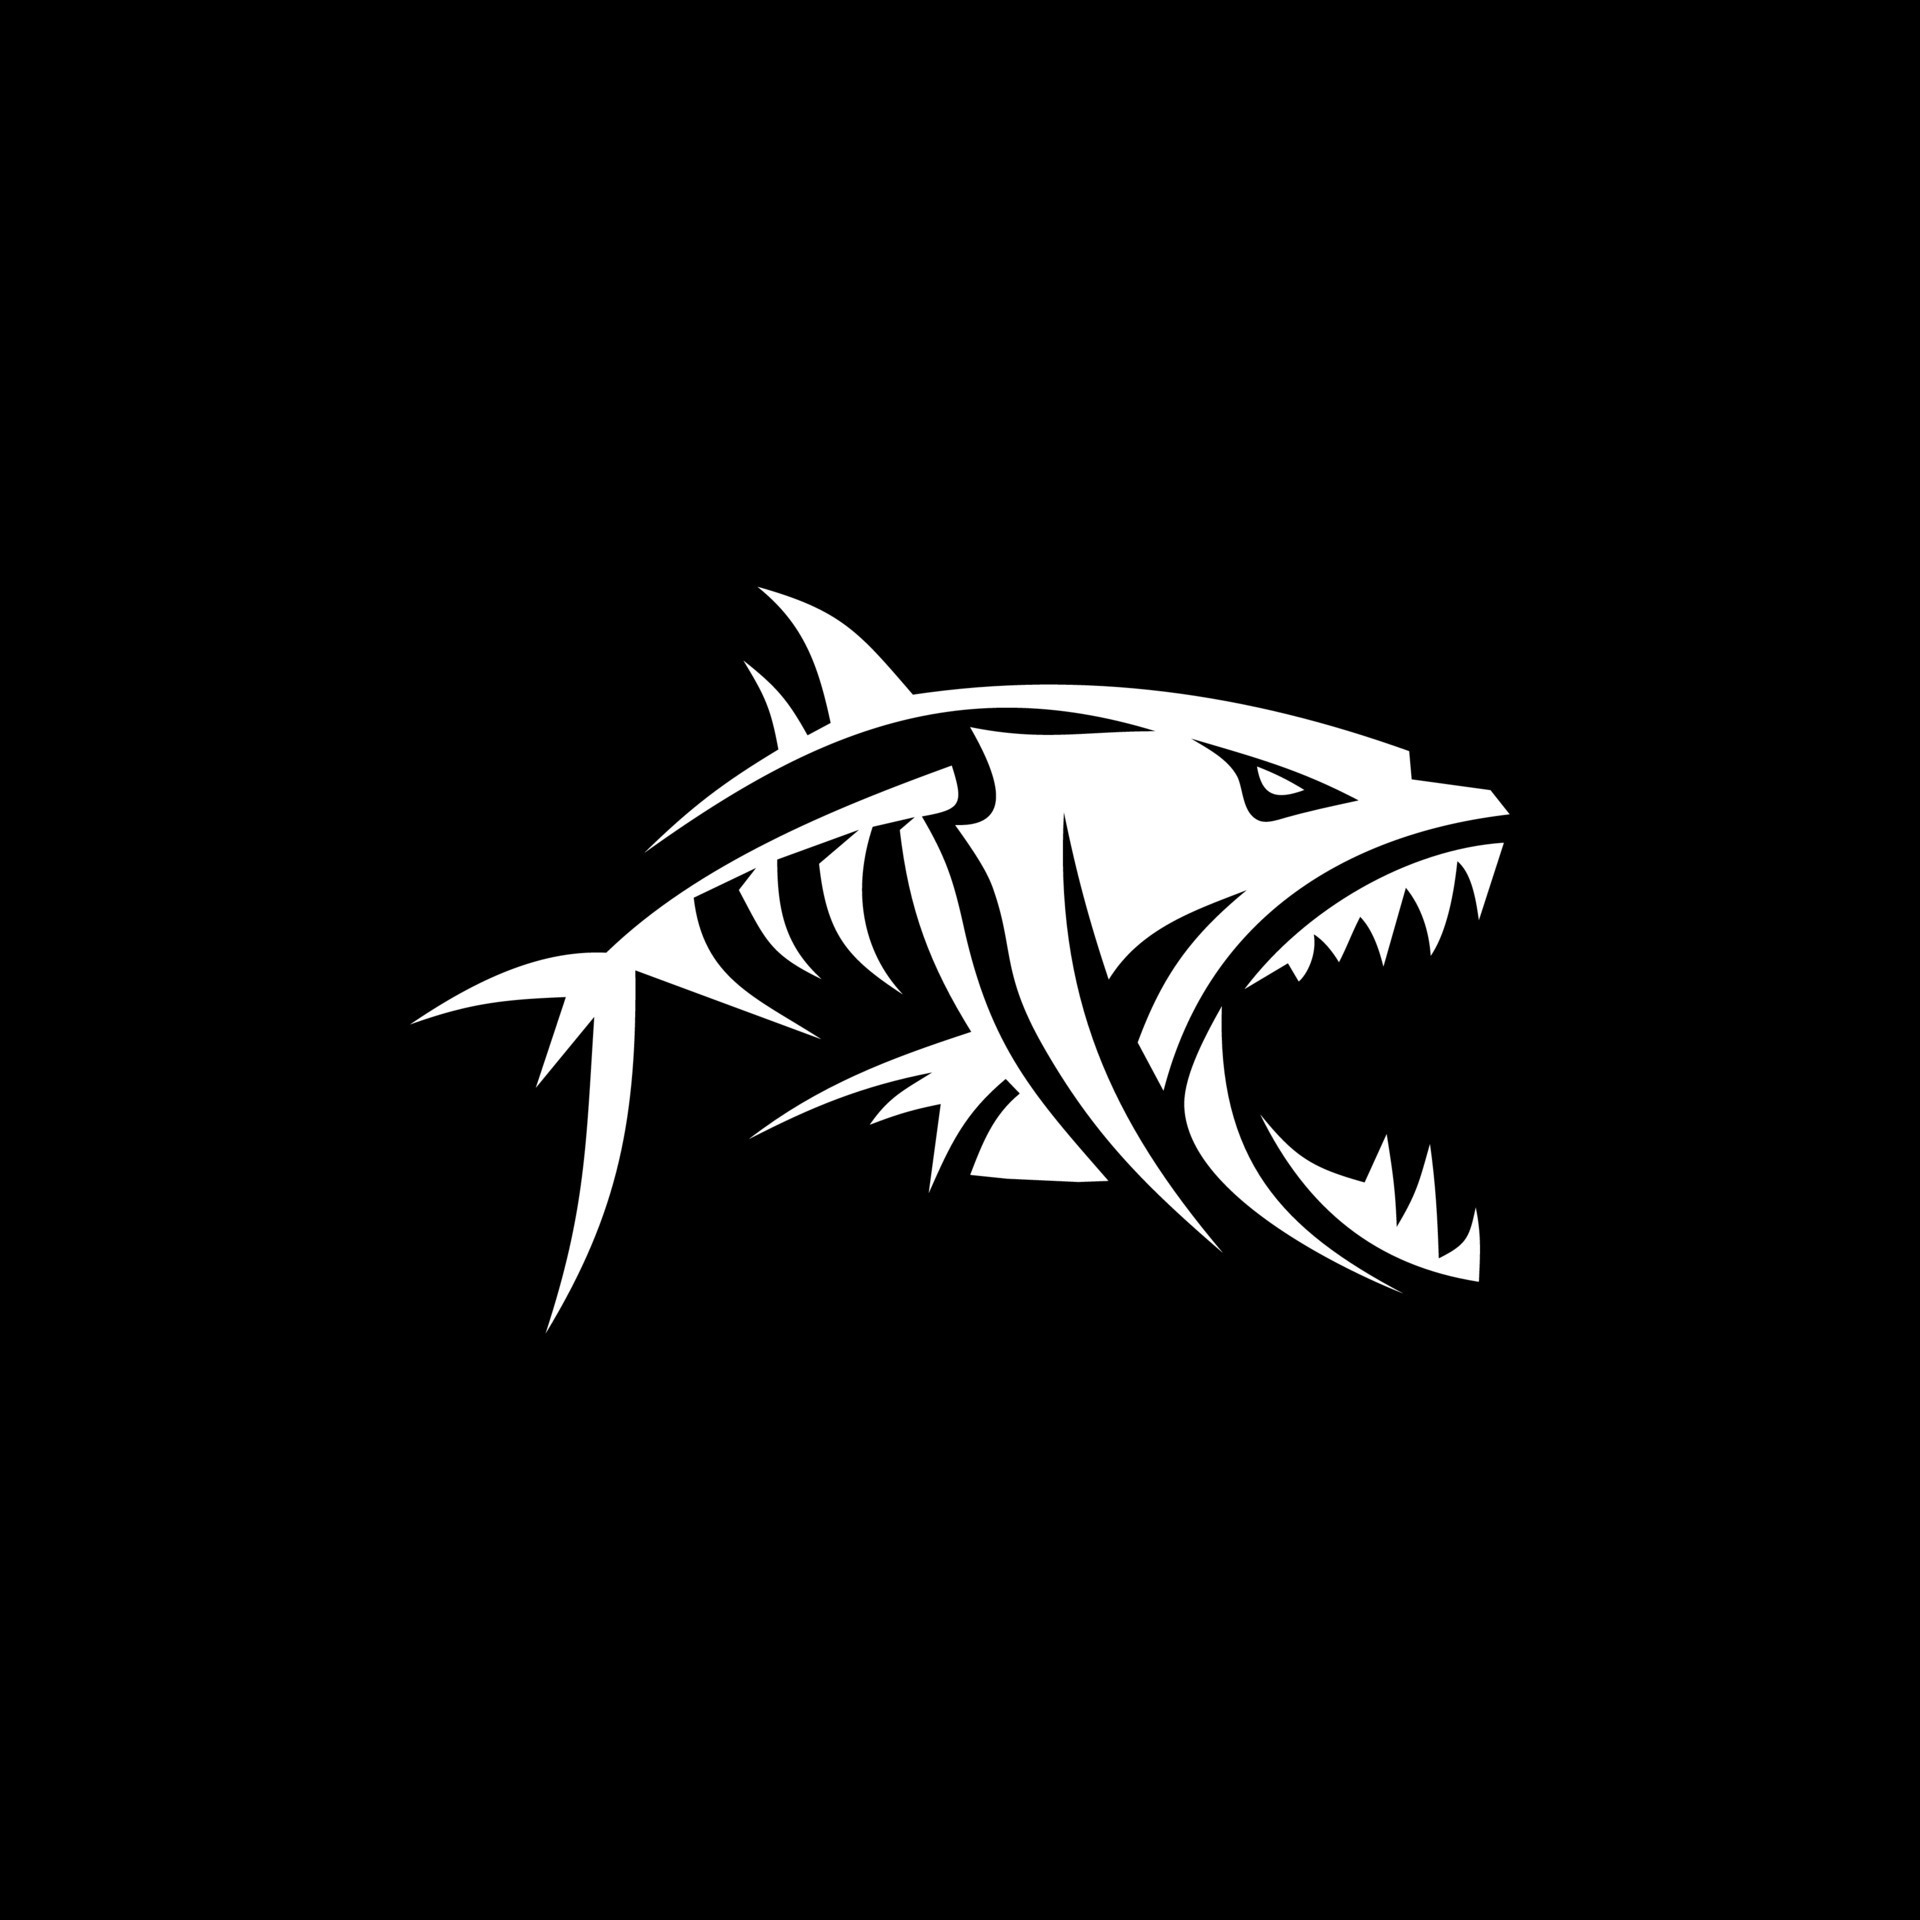 piranha. an illustration of a piranha fish logo with sharp teeth